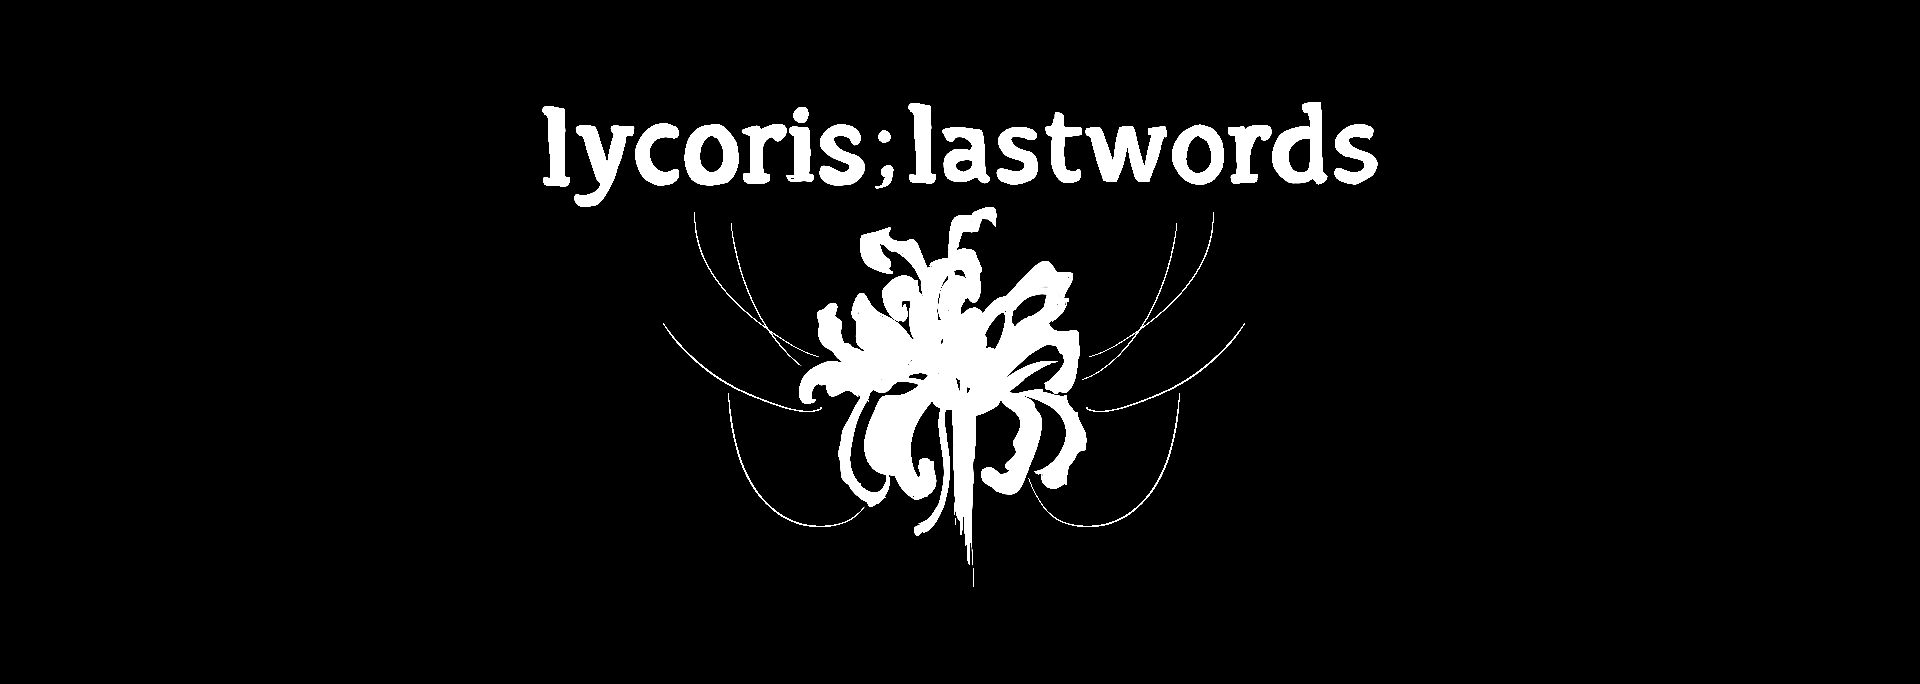 lycoris;lastwords